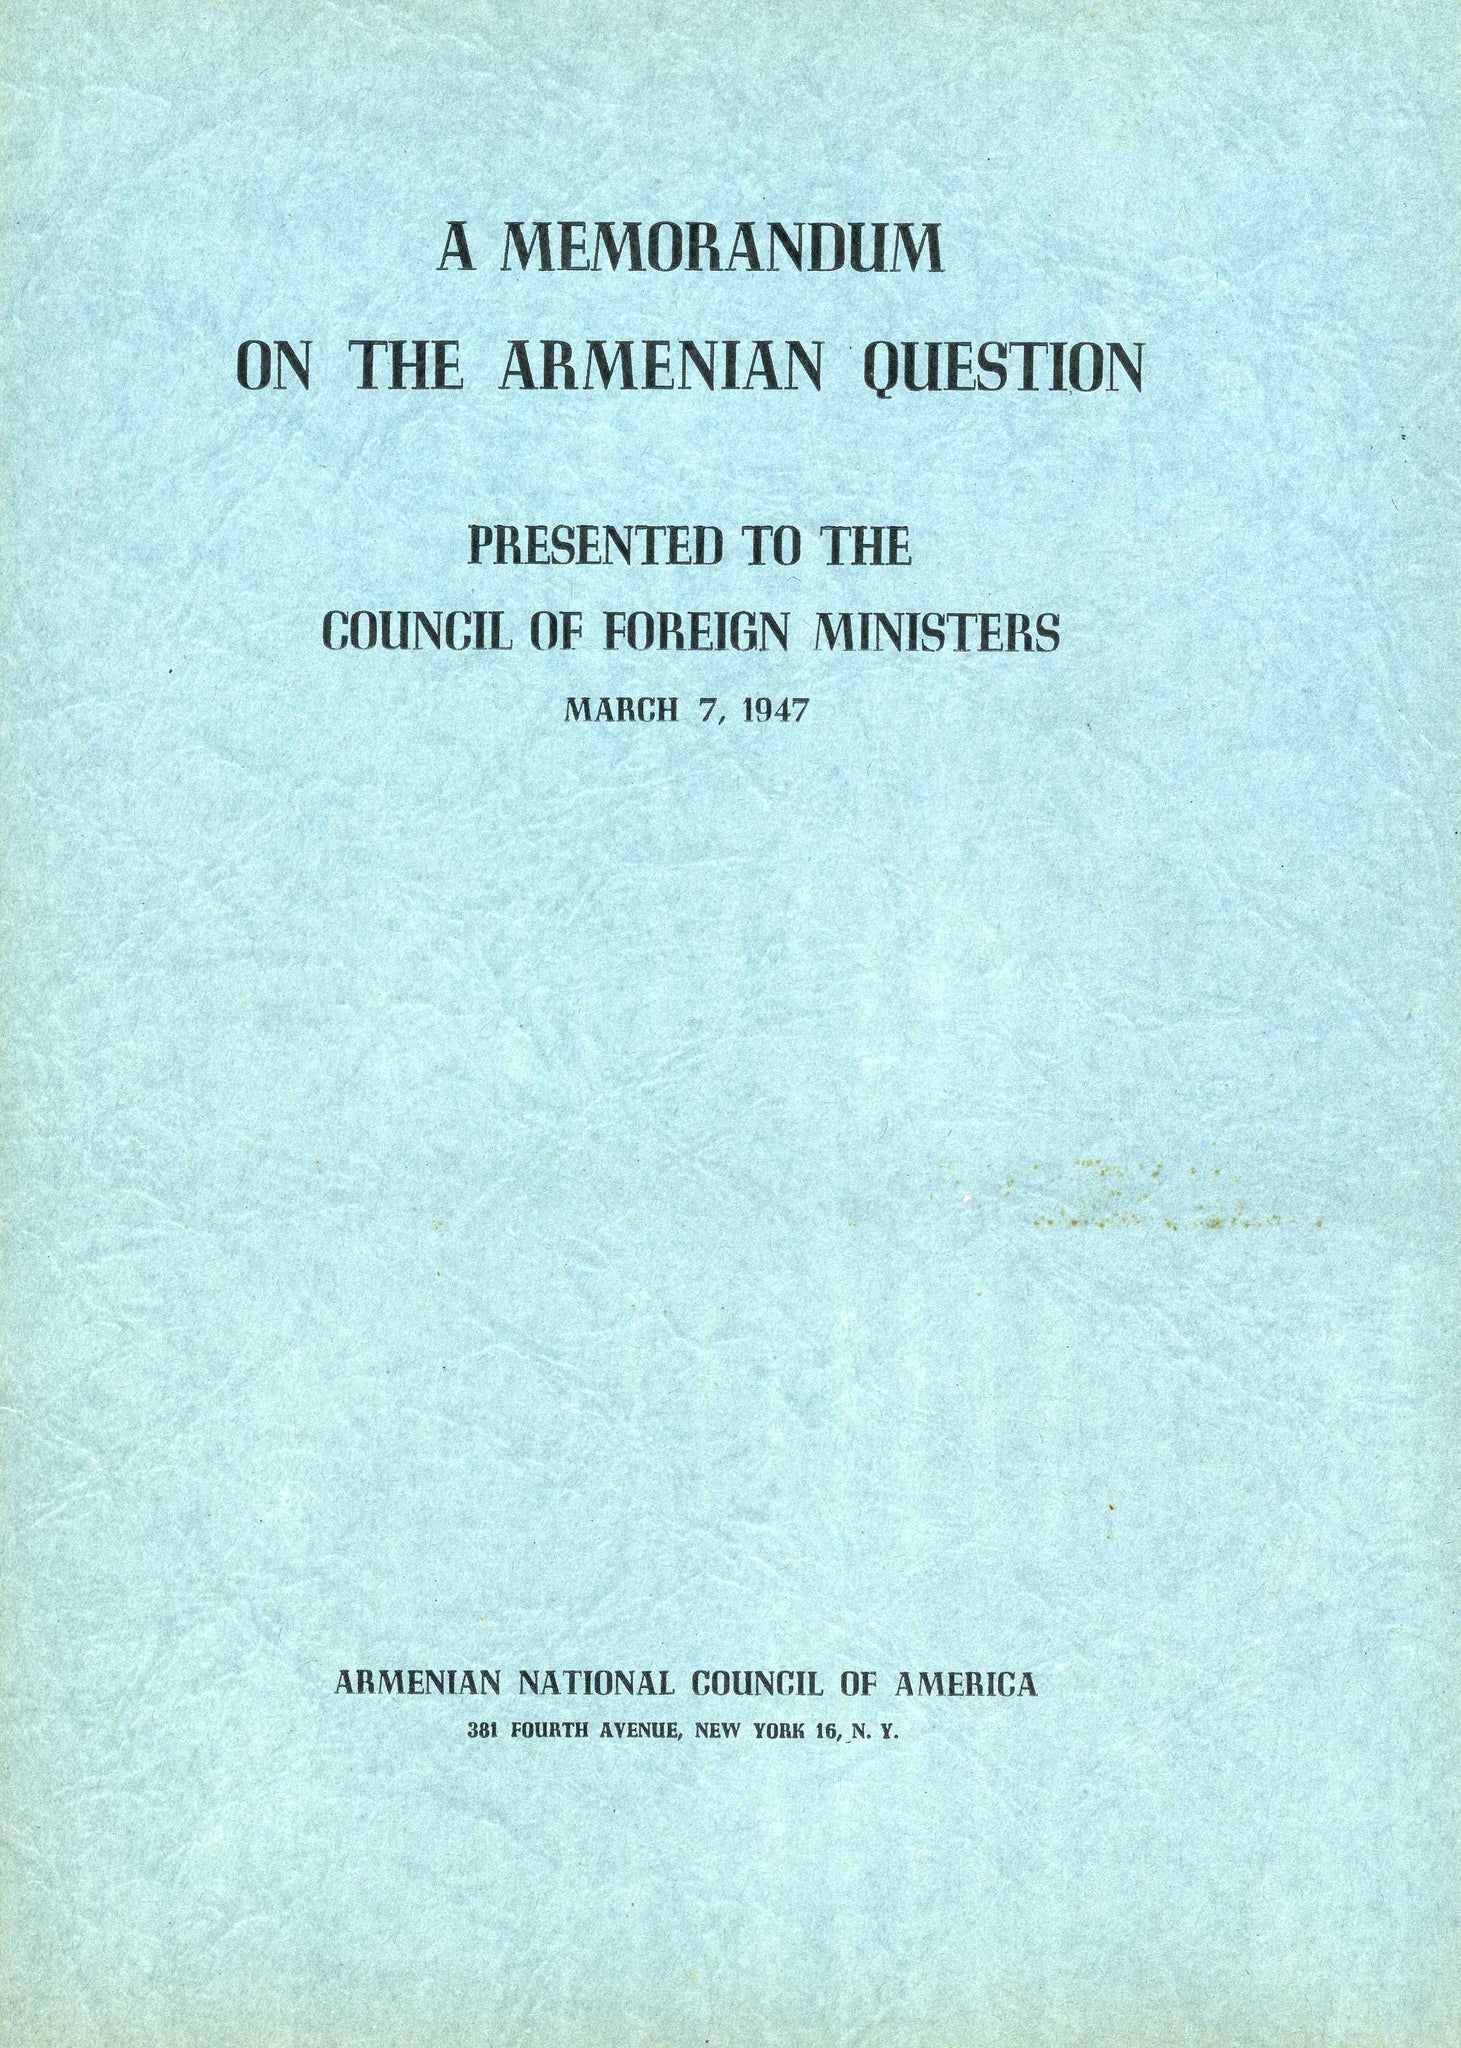 MEMORANDUM ON THE ARMENIAN QUESTION